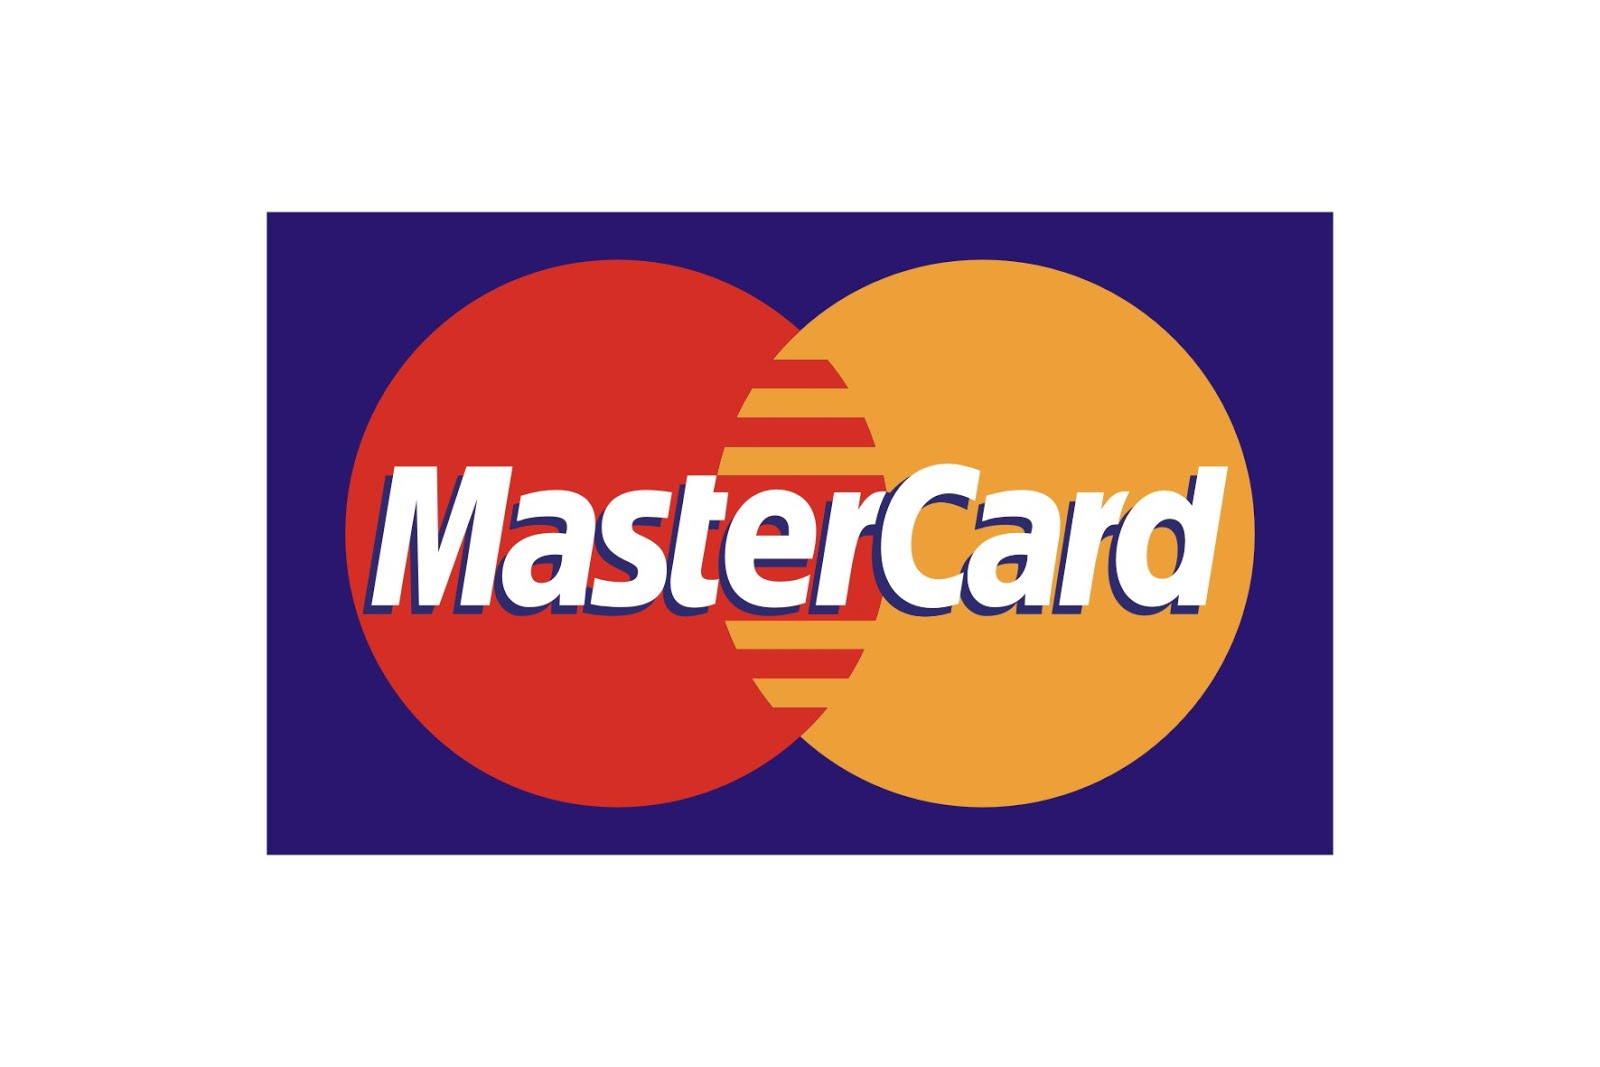 T me brand mastercard